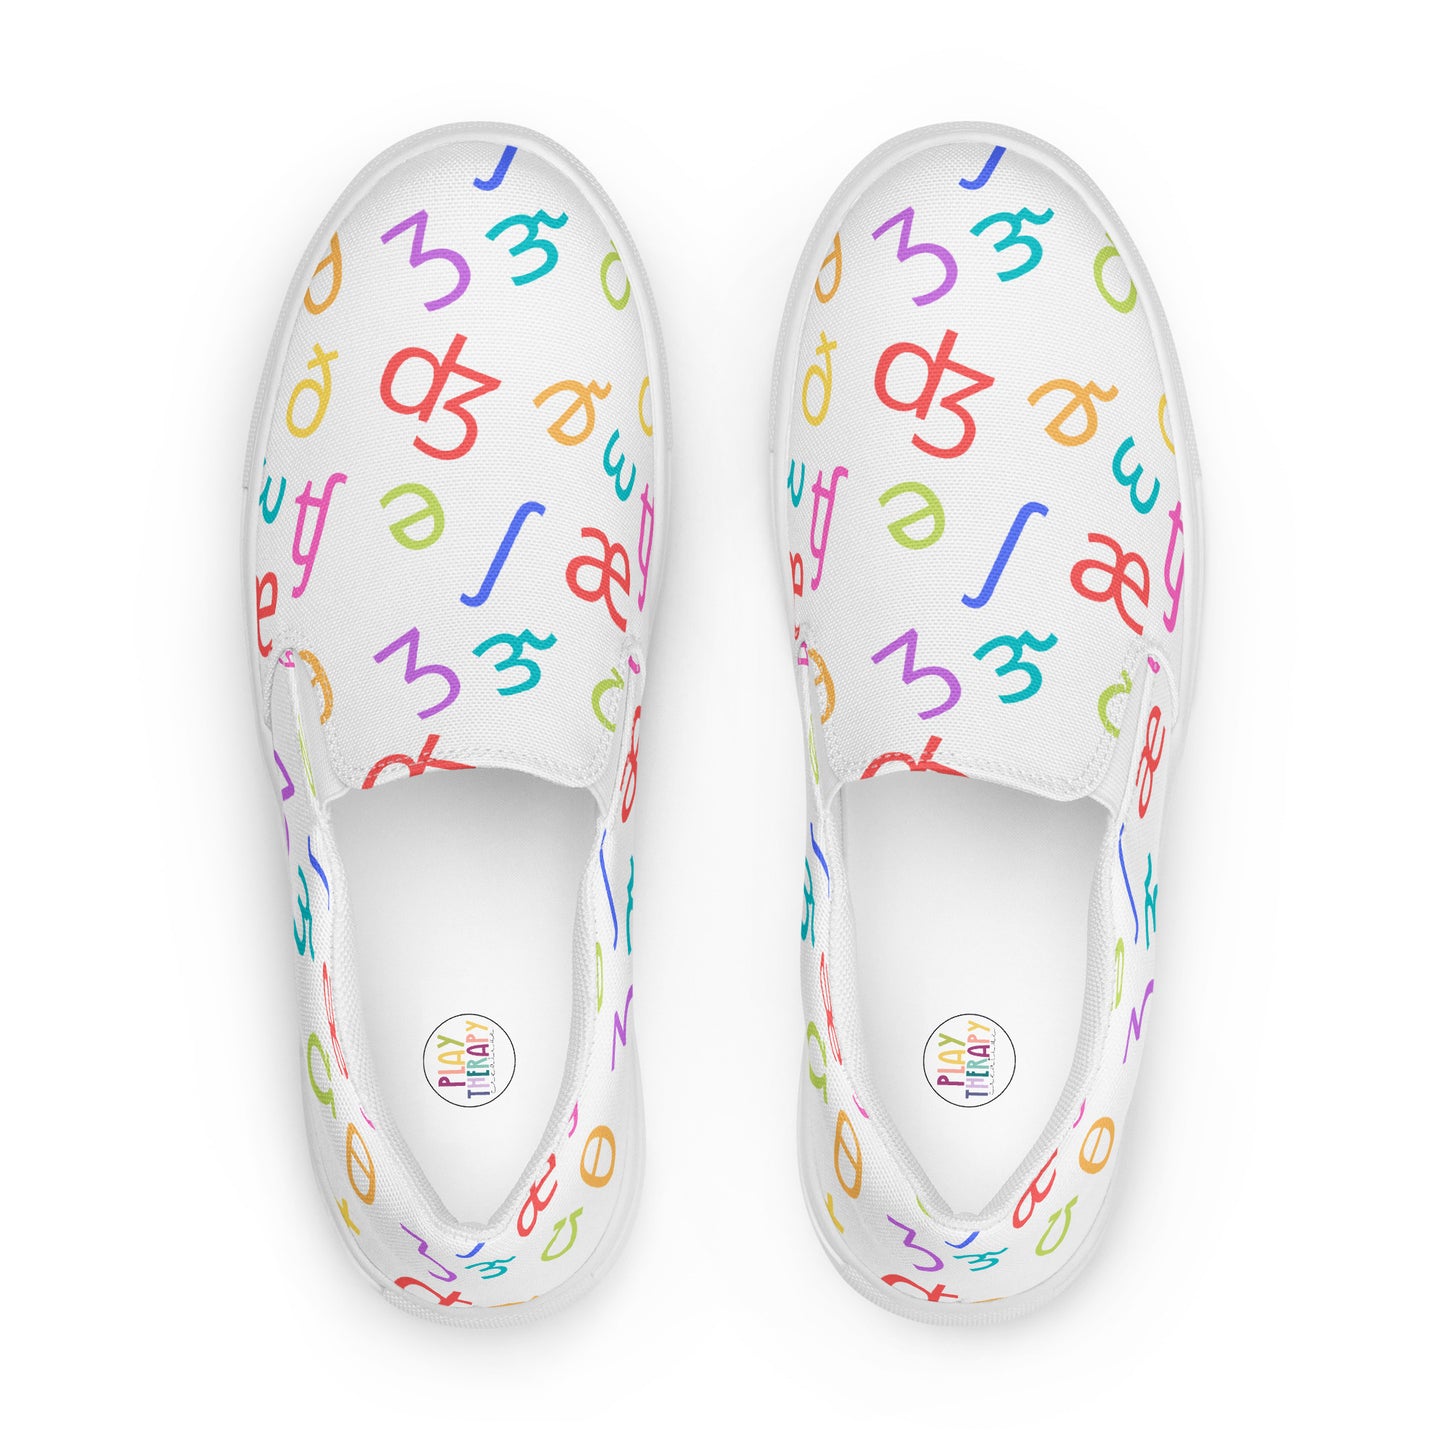 Bright Rainbow on White IPA Slip-on Canvas Shoes (Women's Sizes)